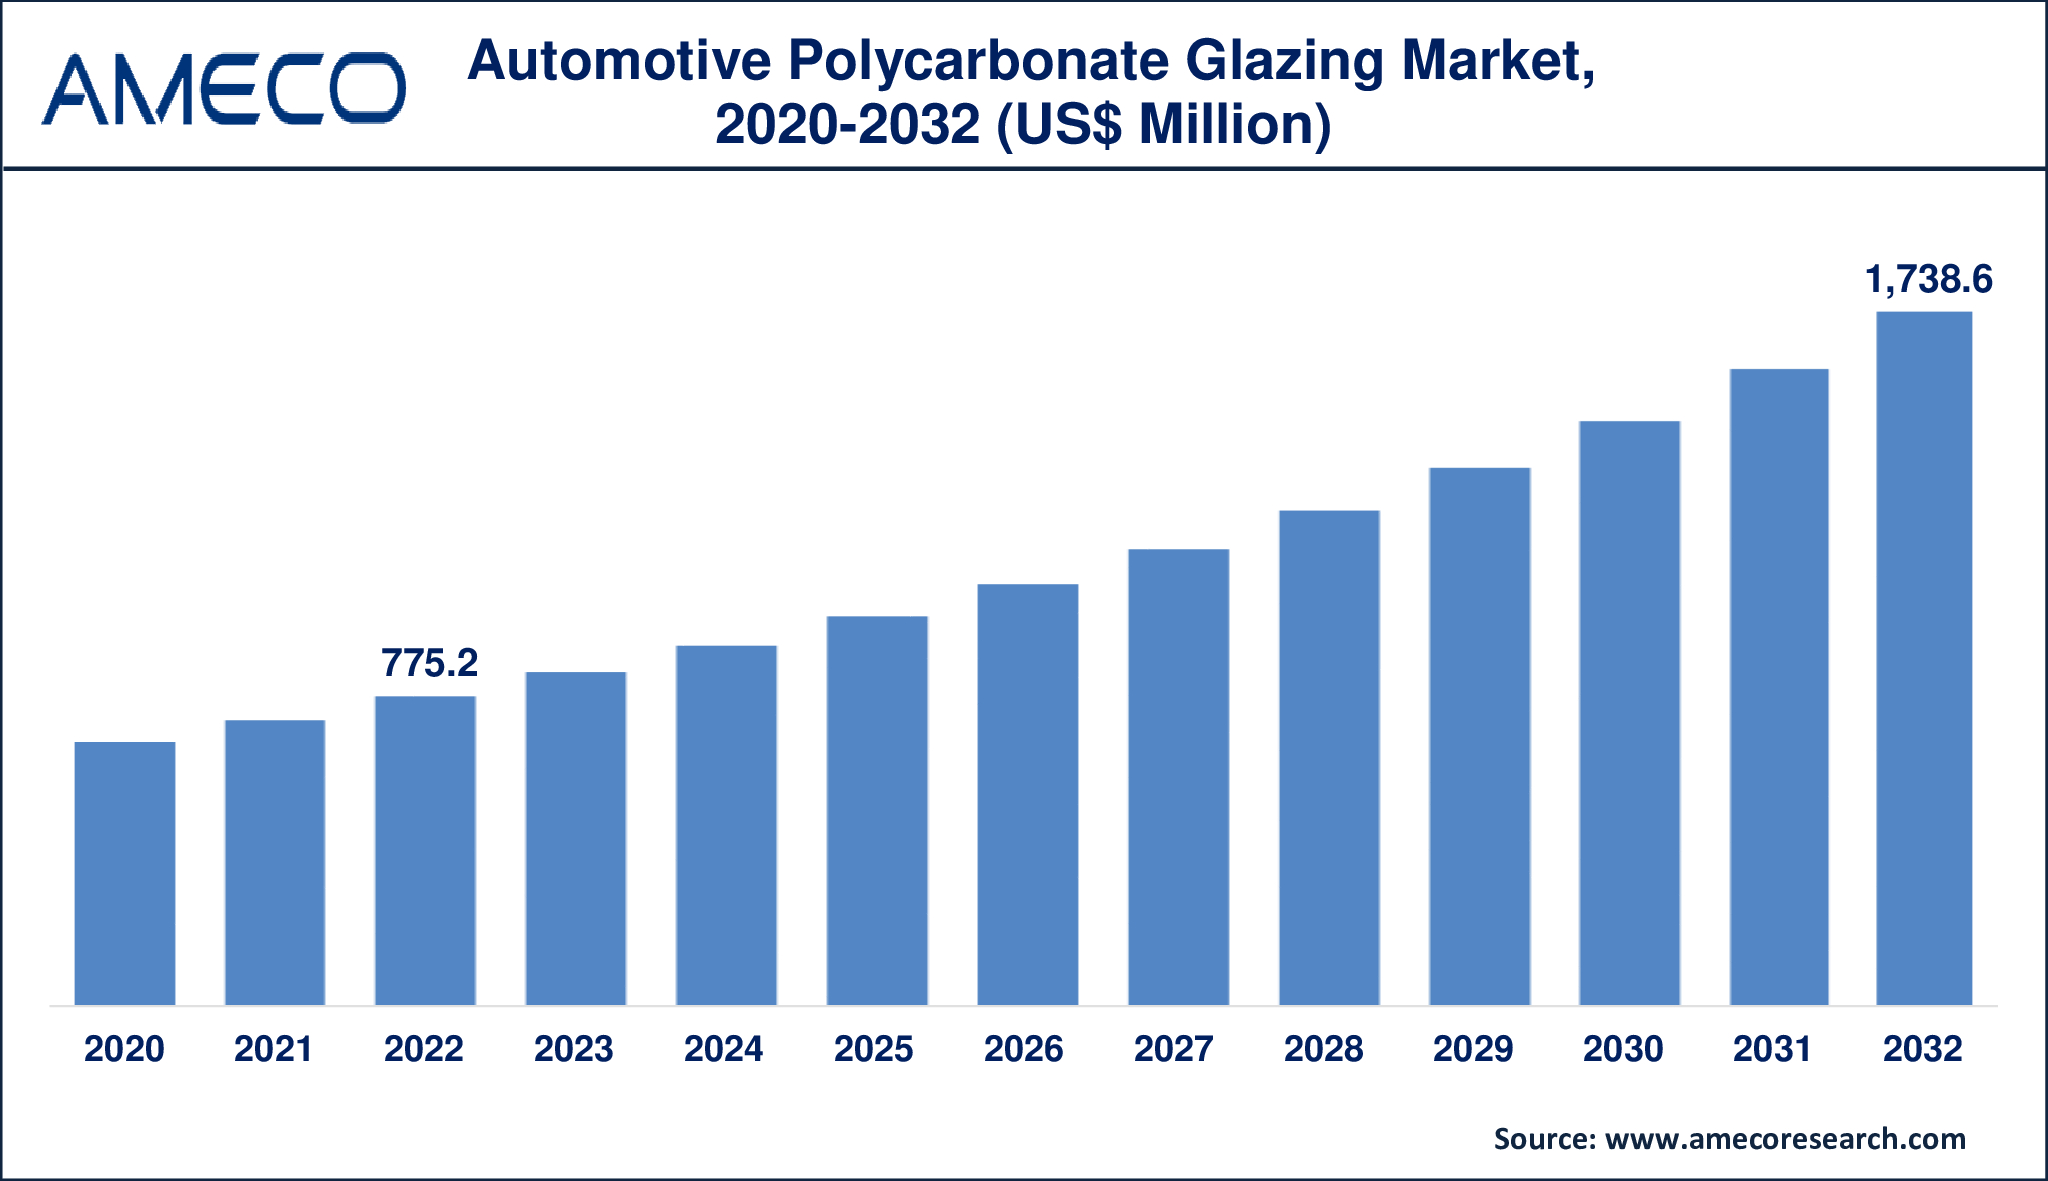 Automotive Polycarbonate Glazing Market Dynamics